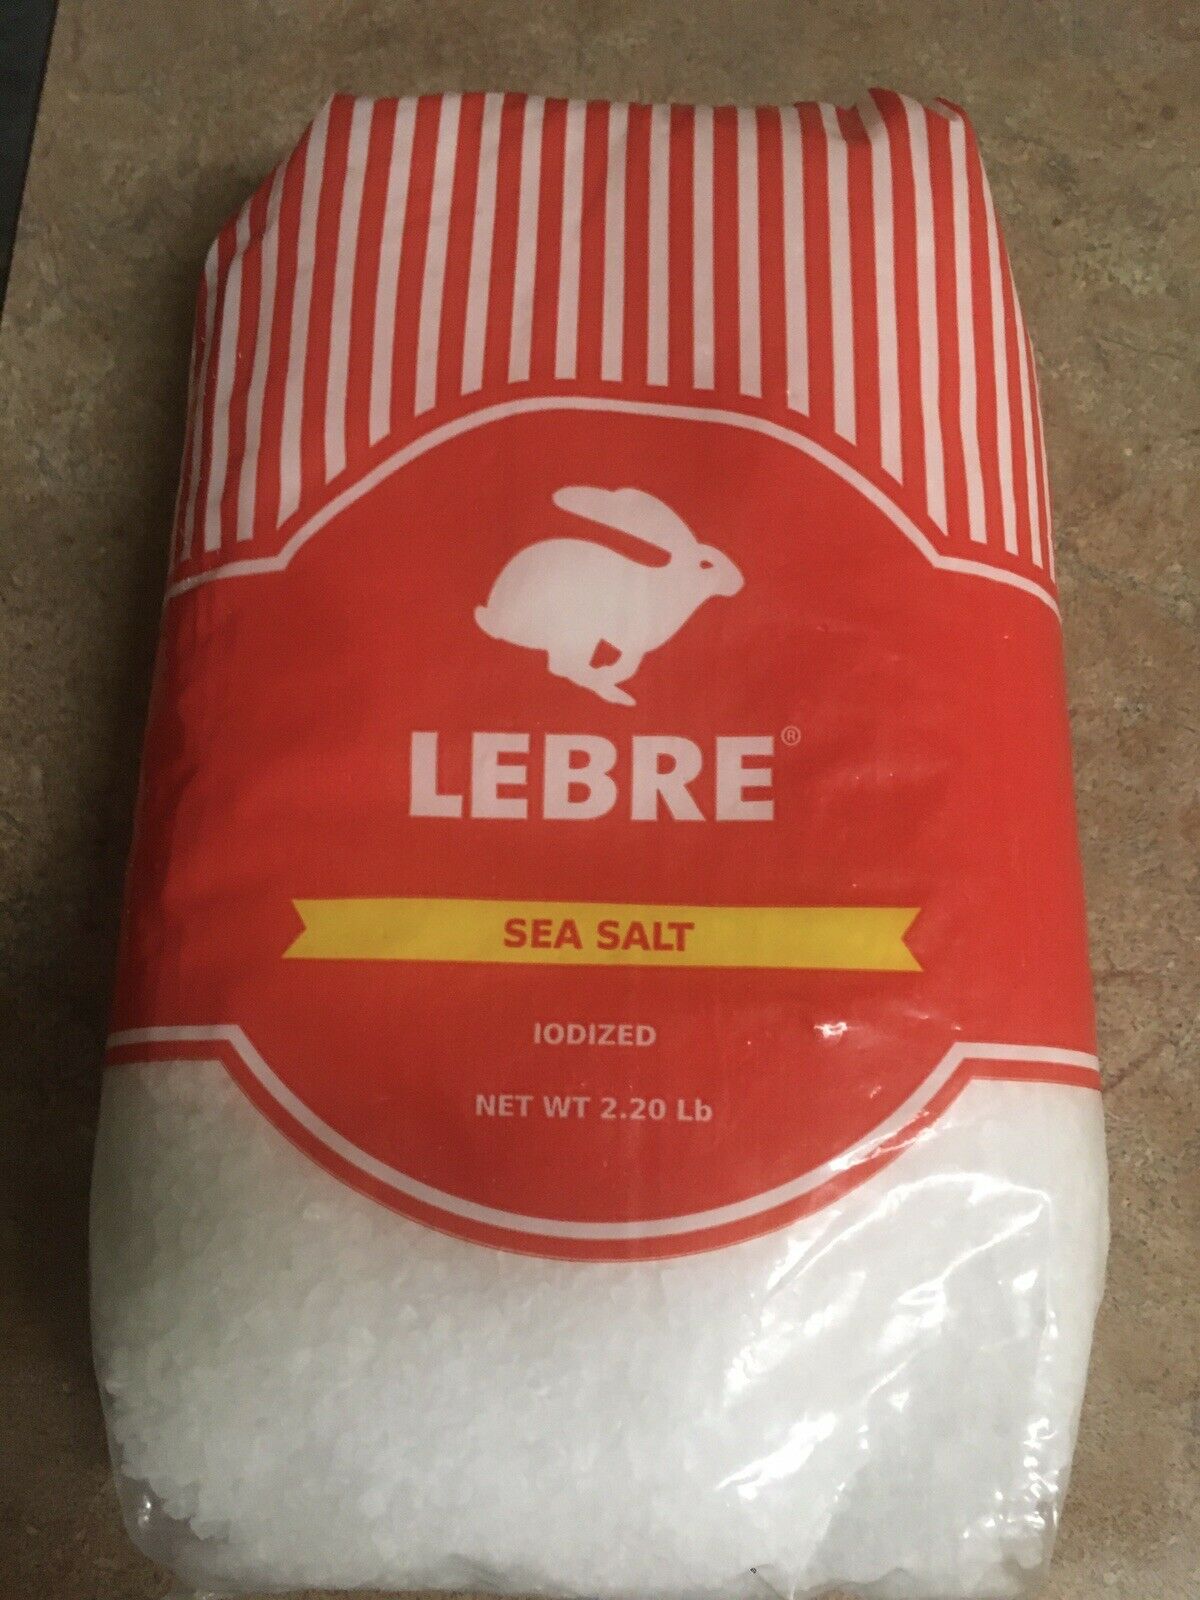 Lebre Iodized Sea Salt From Brazil - Coarse Grind - 2.20 Pounds